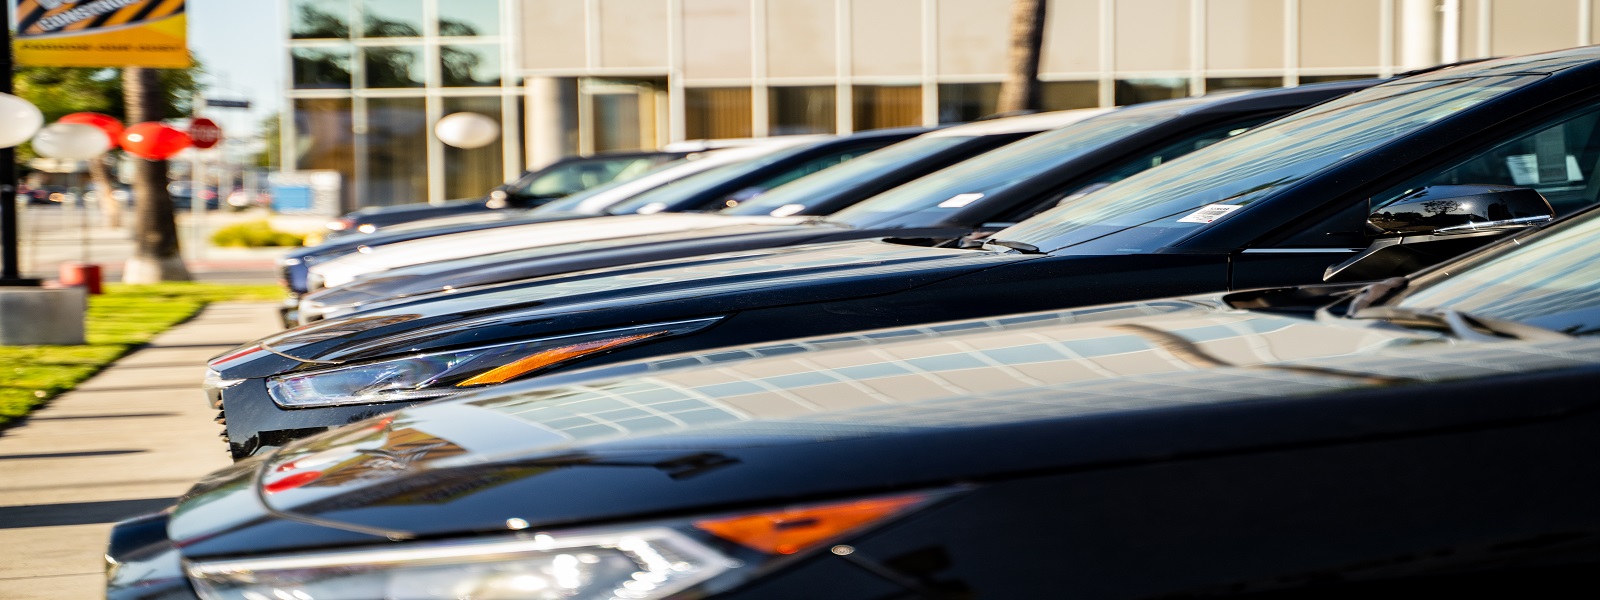 How to Spot a Good Used Car Dealership - HS Cars Company Inc.